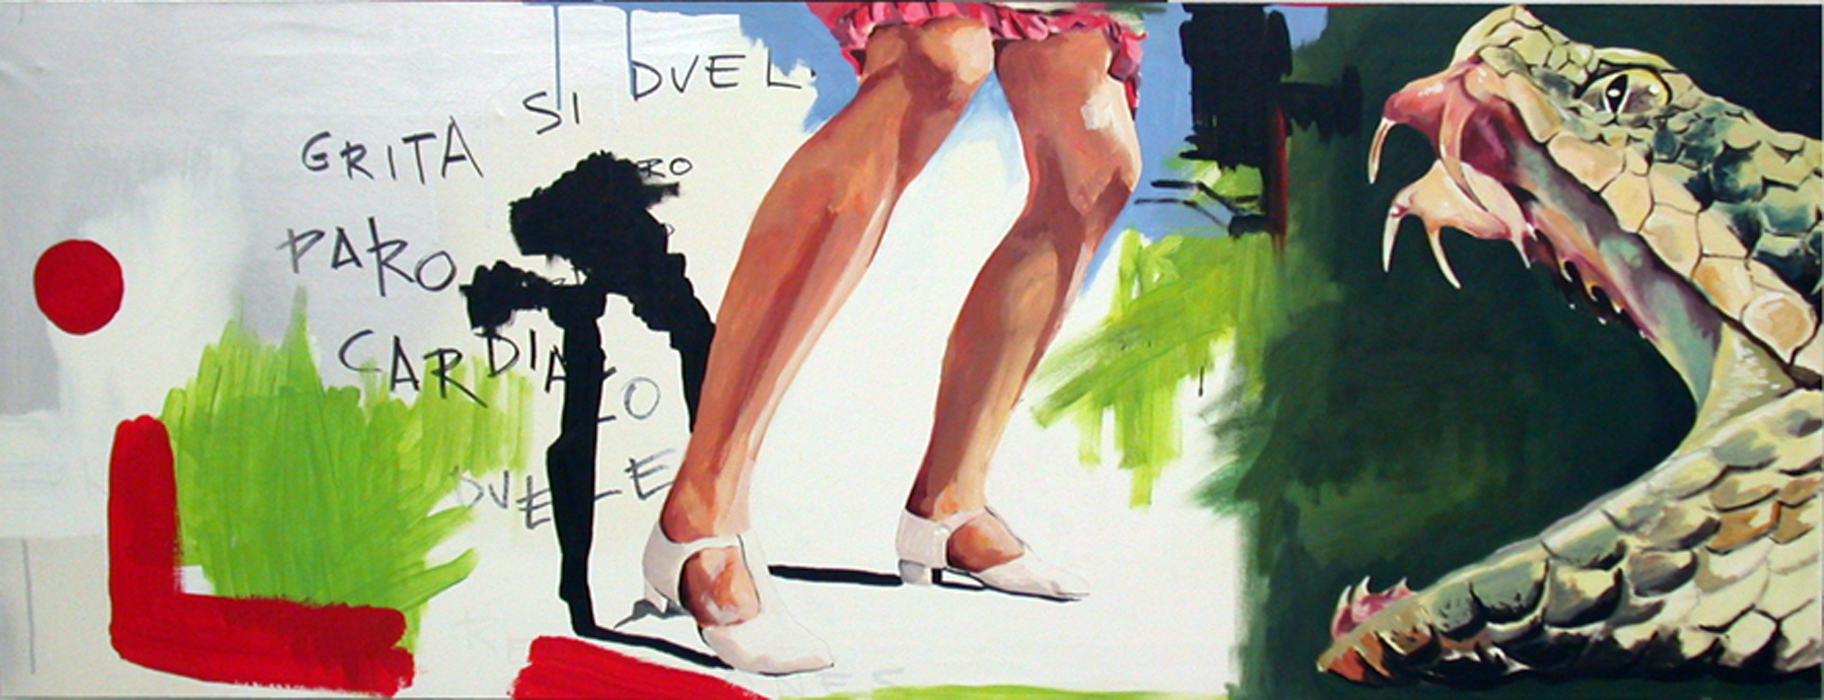 “GRITA SI DUELE, PARO CARDIACO”. 60x160 cm. Acrílico/lienzo. 2005